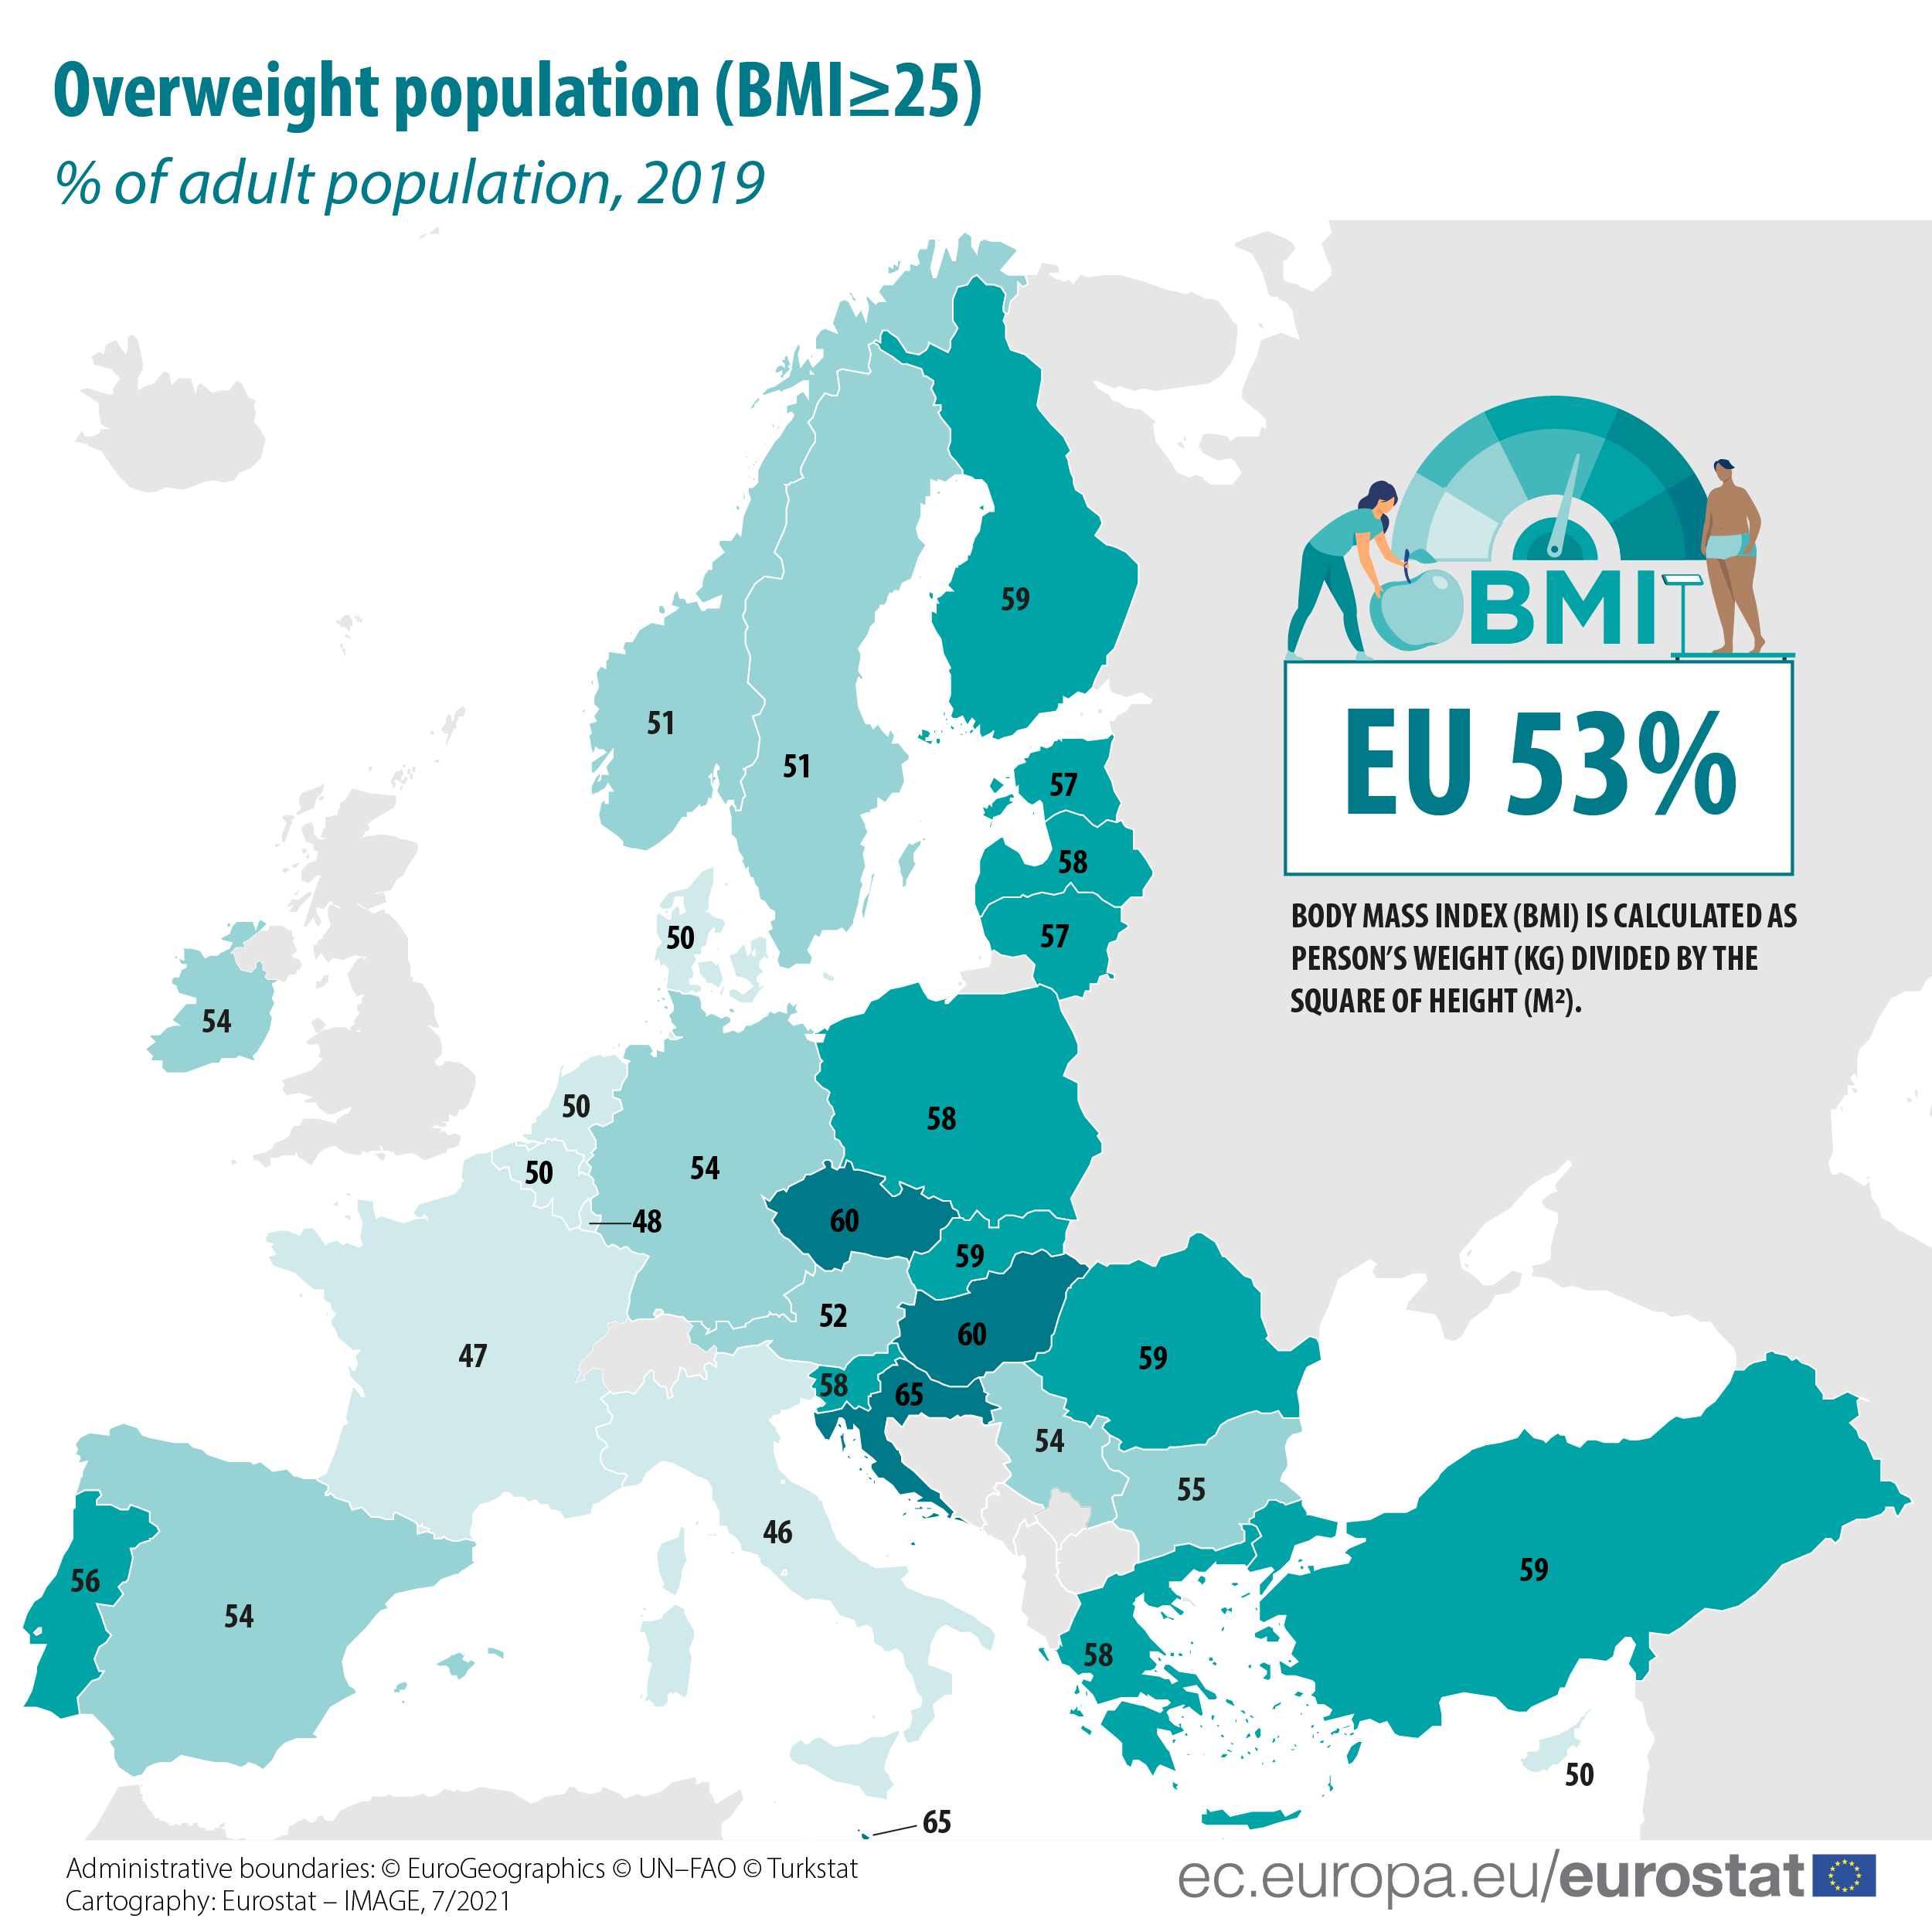 Average natural adult female hip measurement (Europe). : r/2westerneurope4u